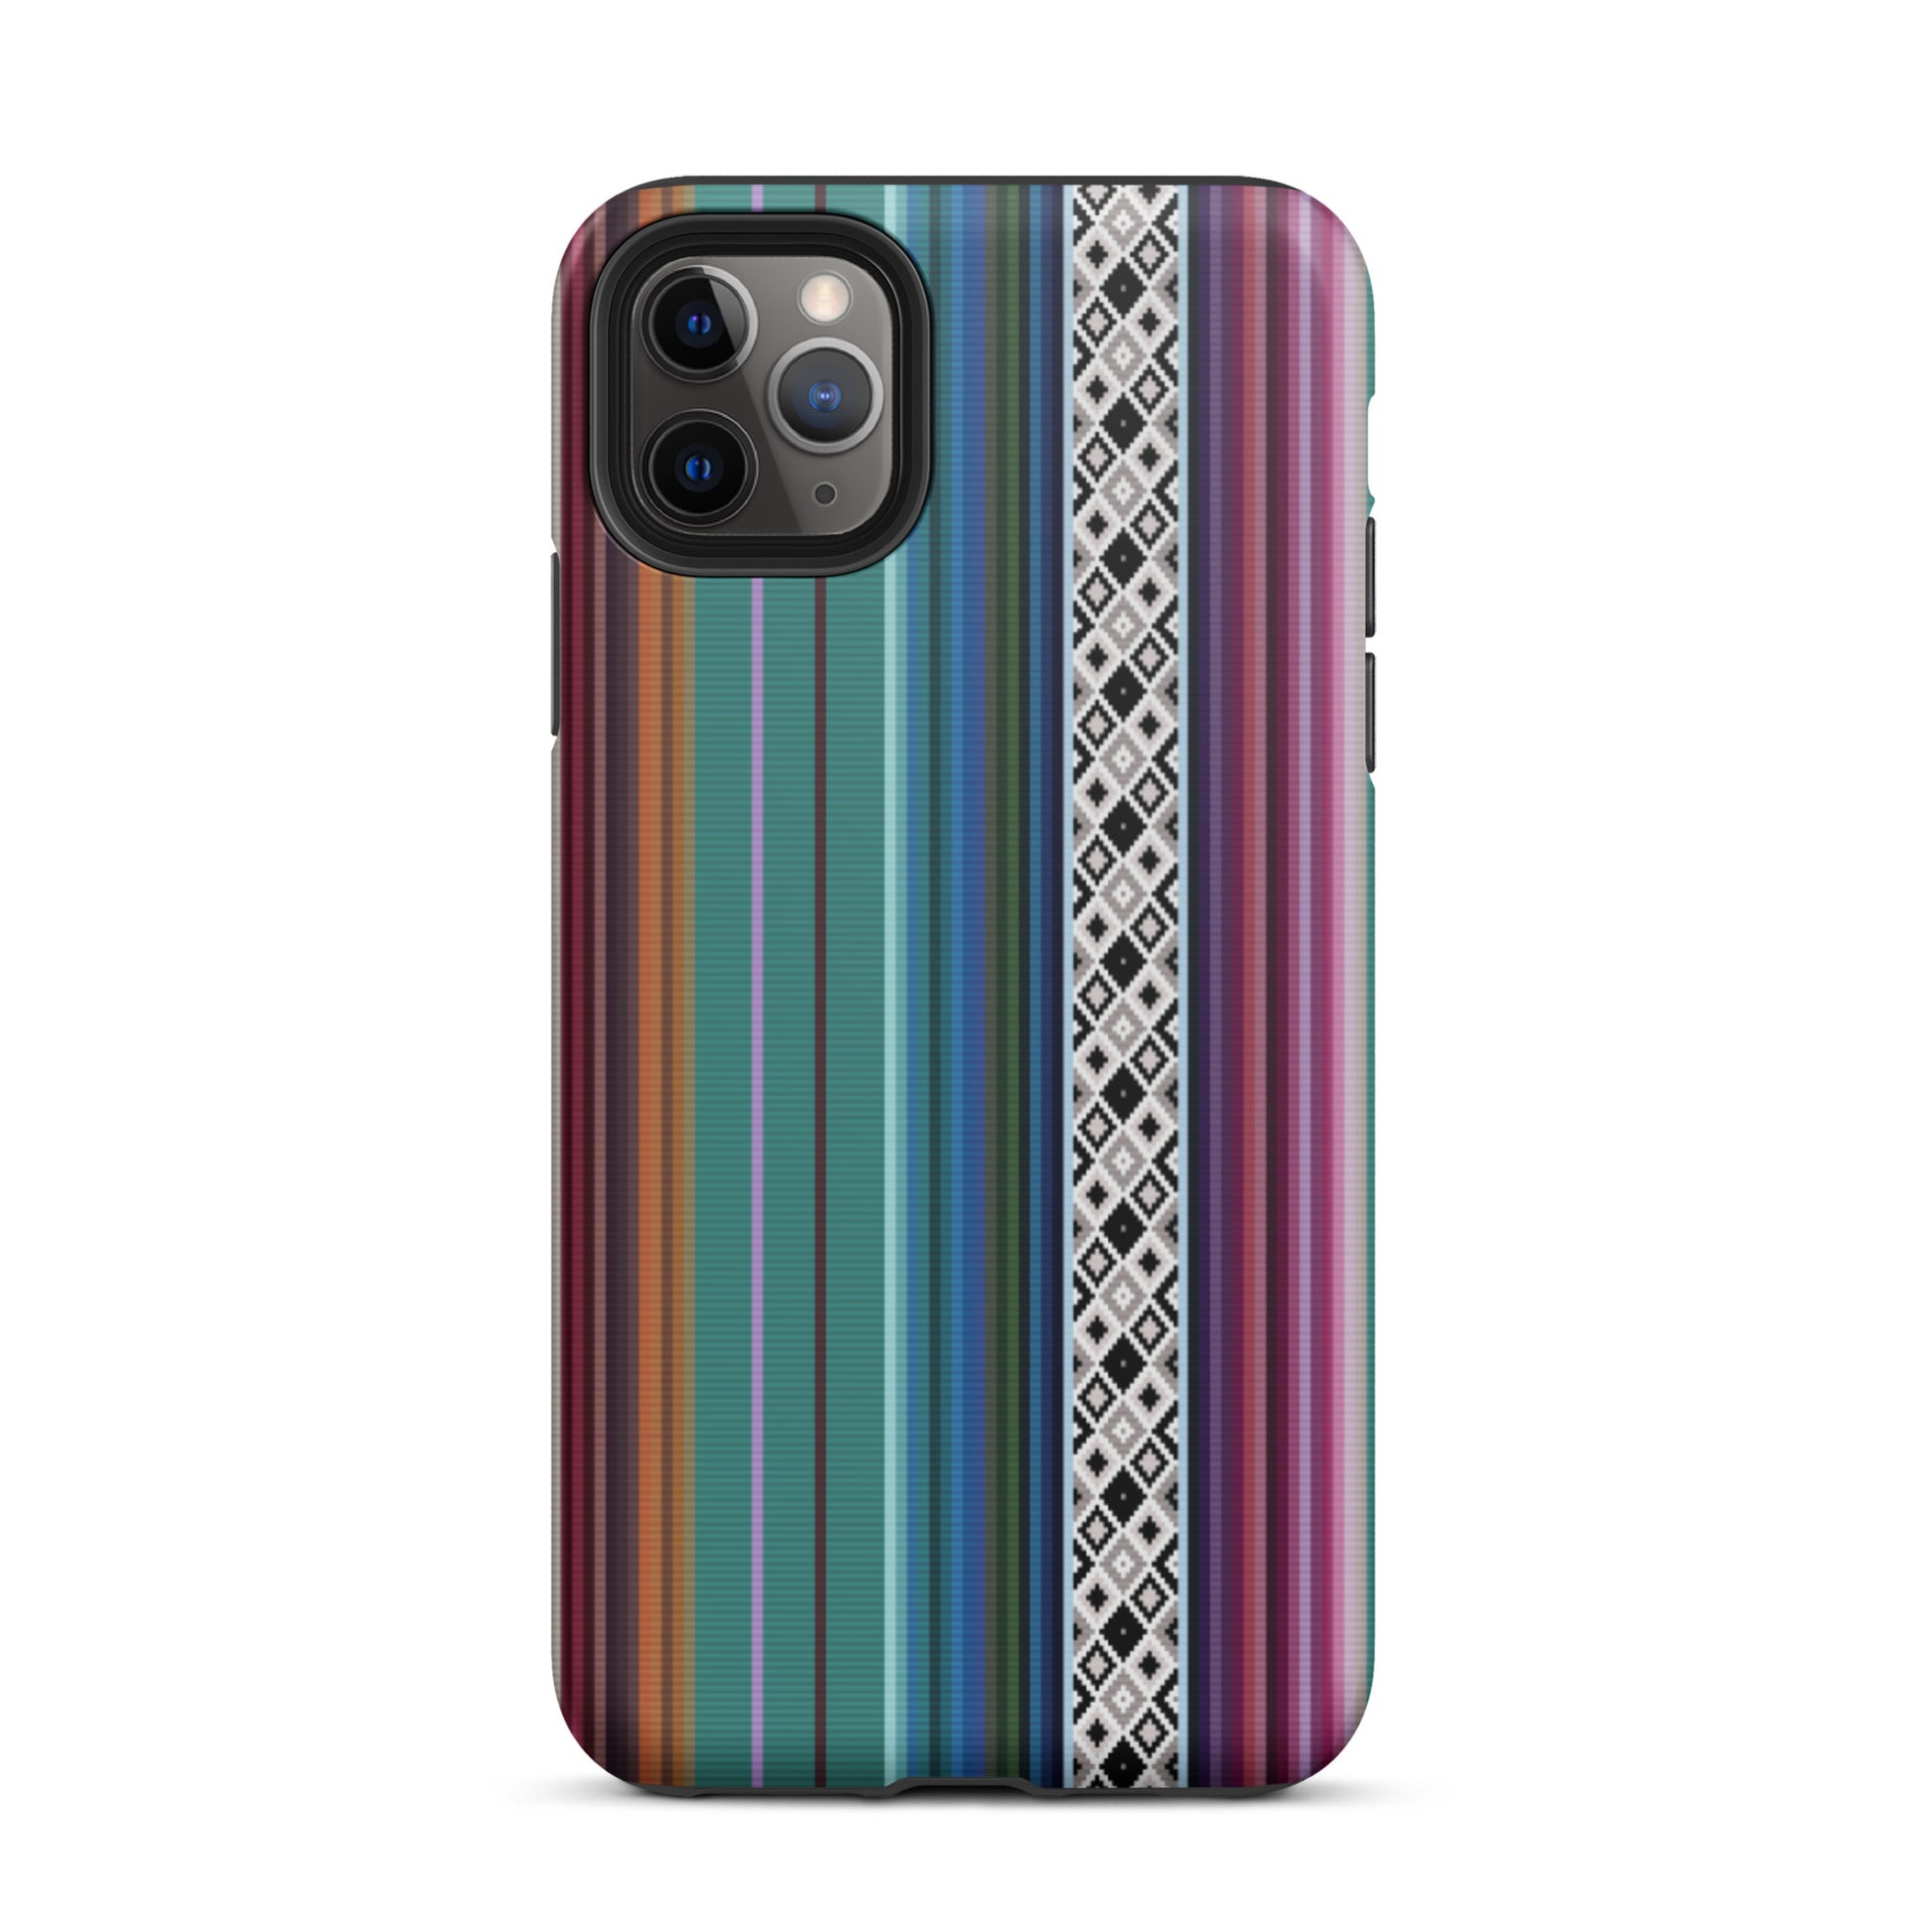 Mexican Aztec Tough iPhone 11 Pro Max case